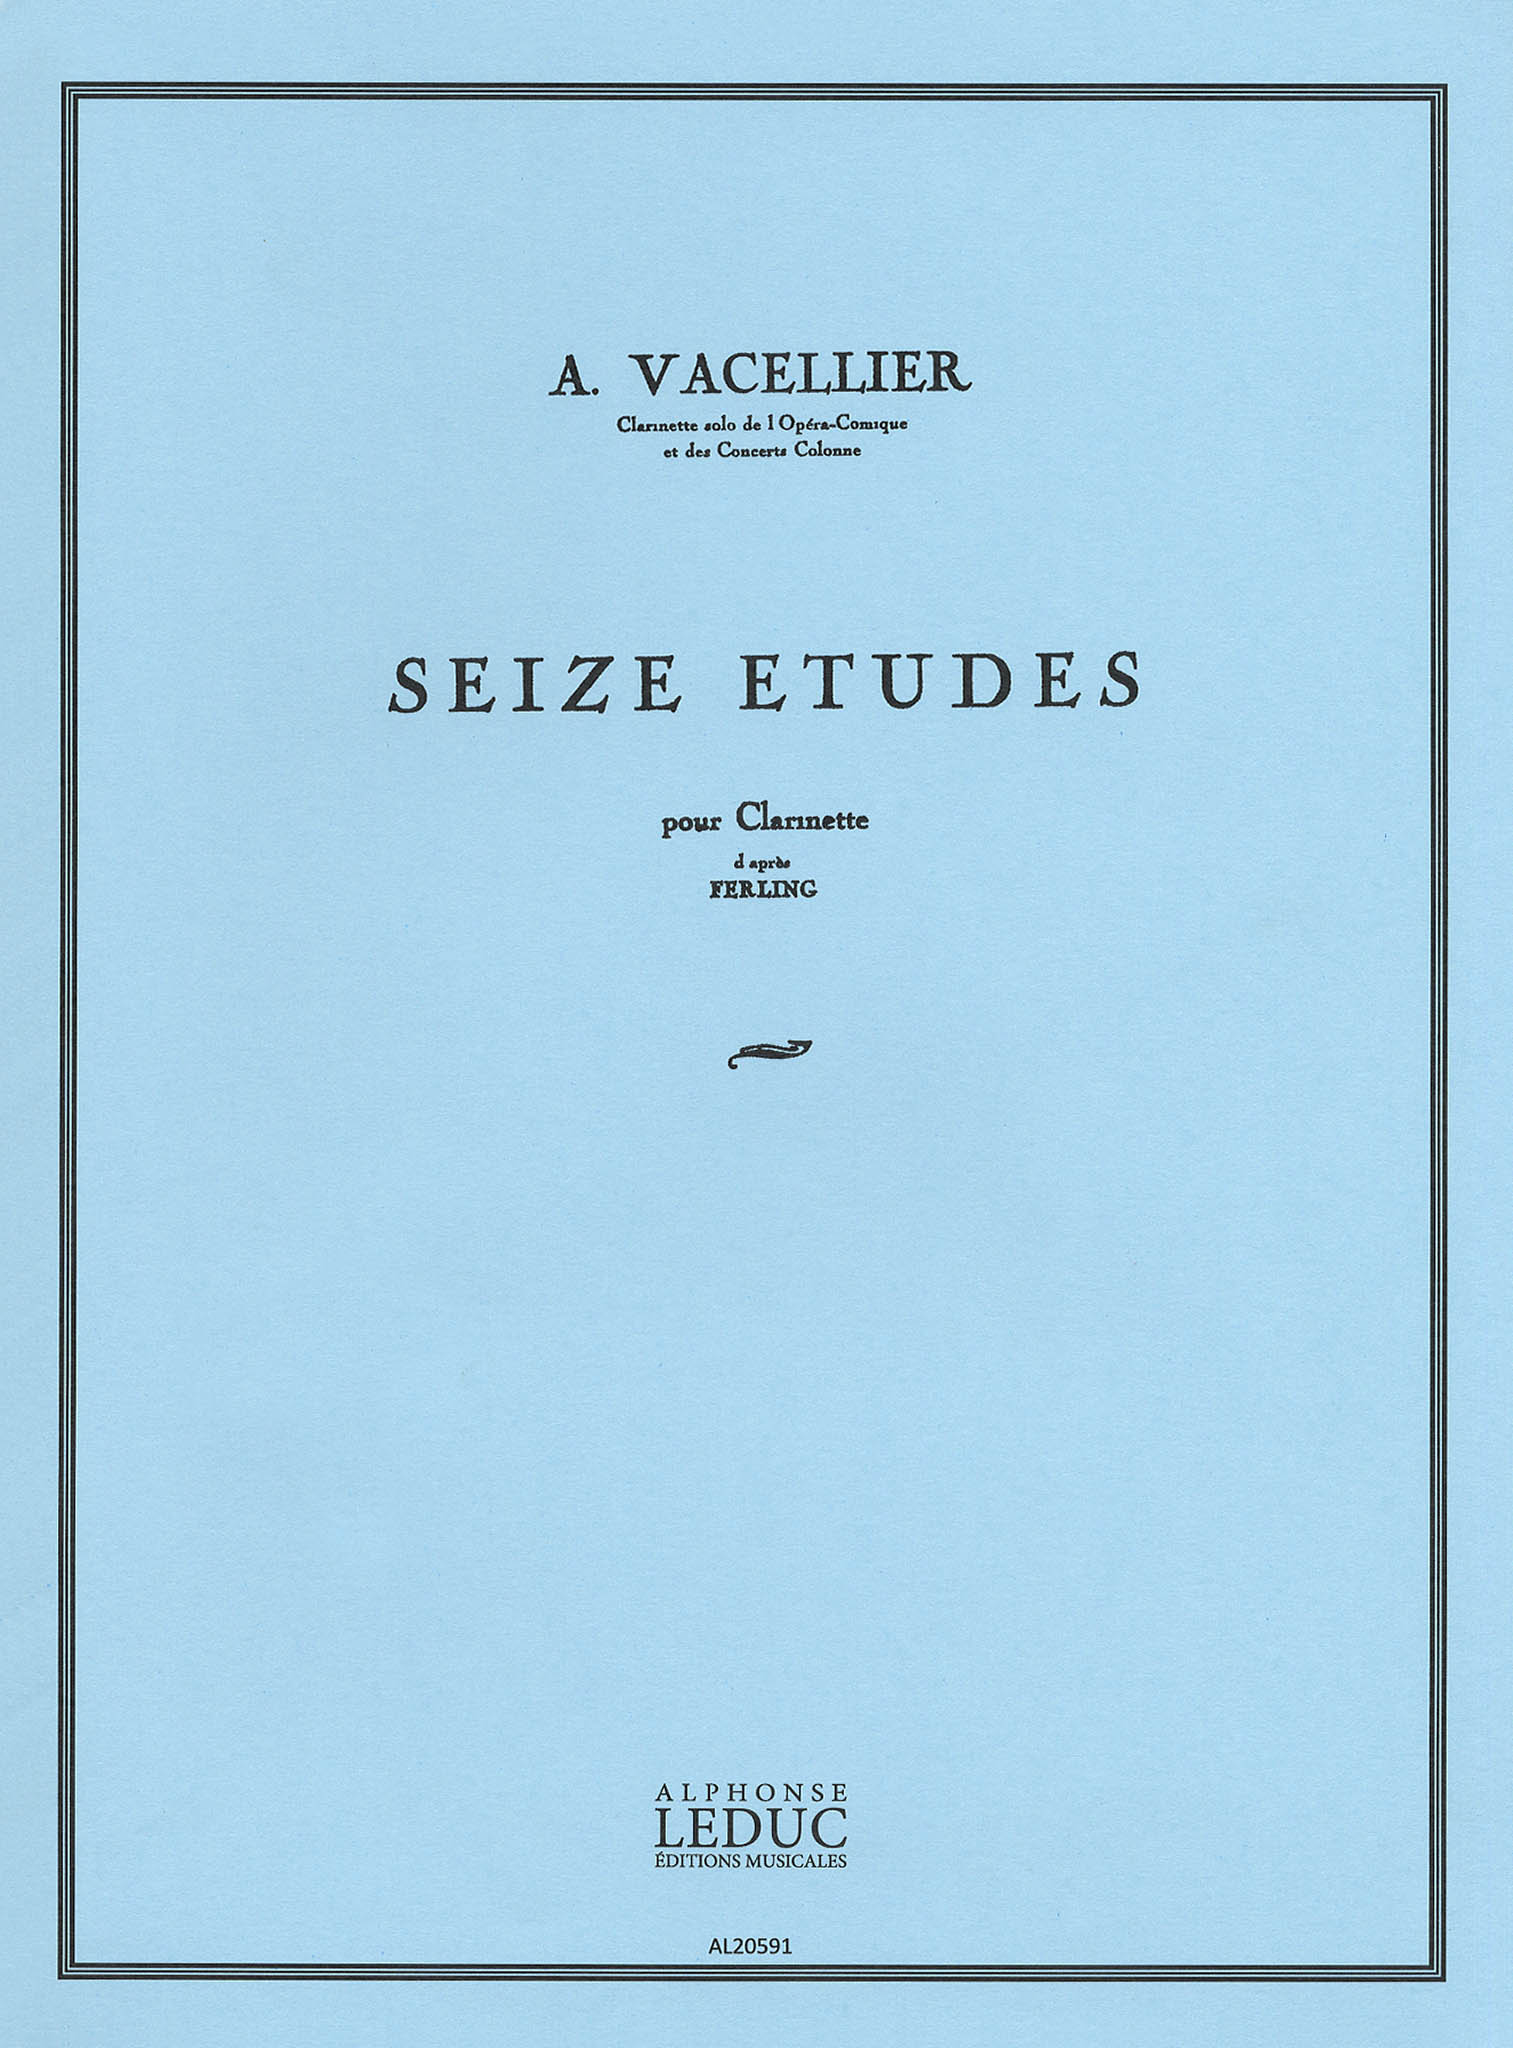 André Vacellier 16 Études for Clarinet after Ferling cover